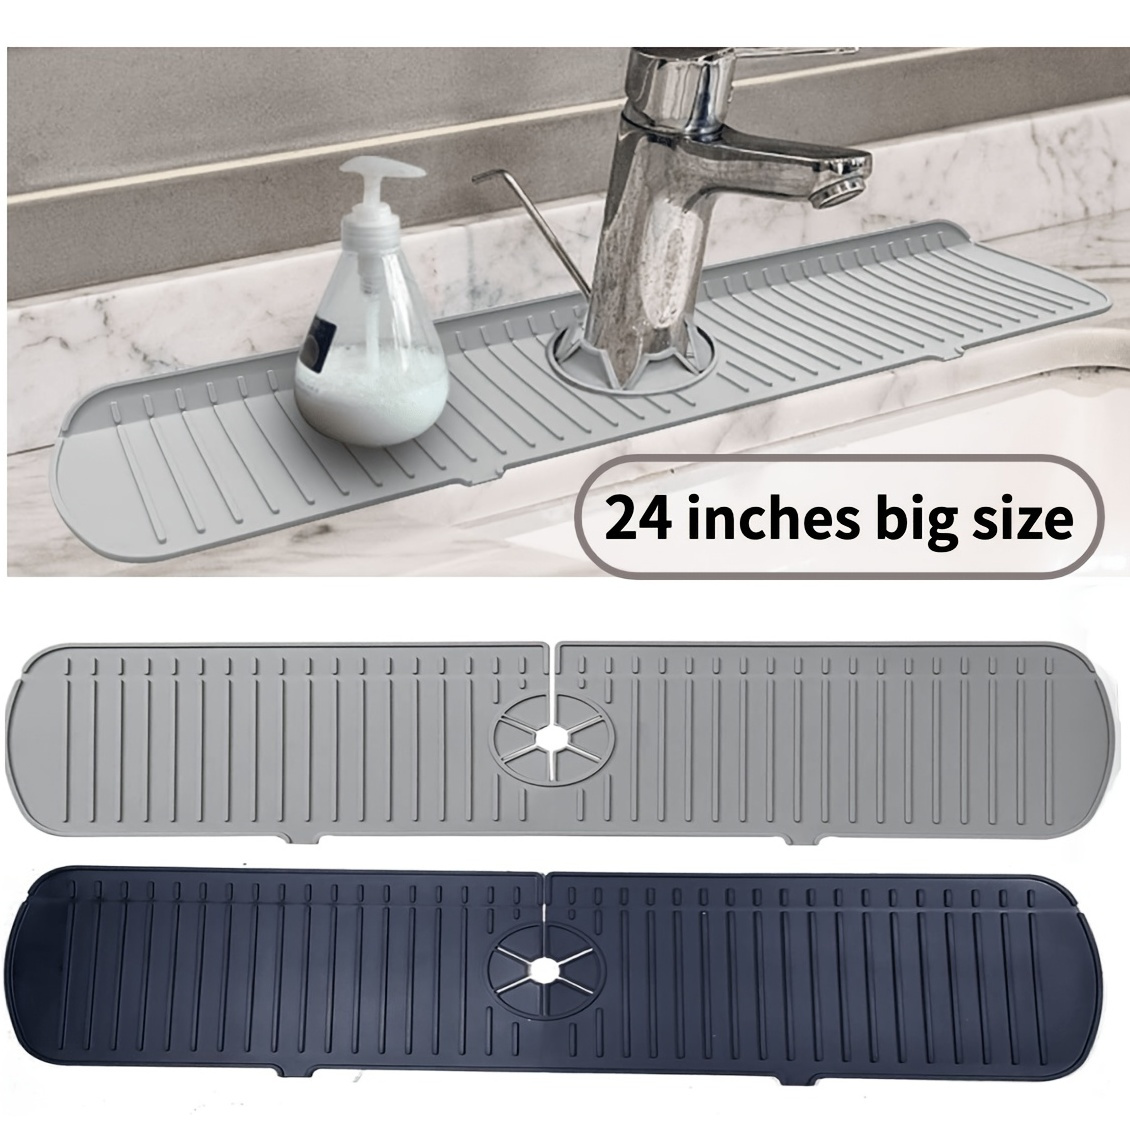 Wovilon Kitchen Sink Splash Guard, Silicone Sink Draining Pad Behind Faucet,  Kitchen Sink Accessories, Faucet Bathroom Absorbent Water Catcher Mat 